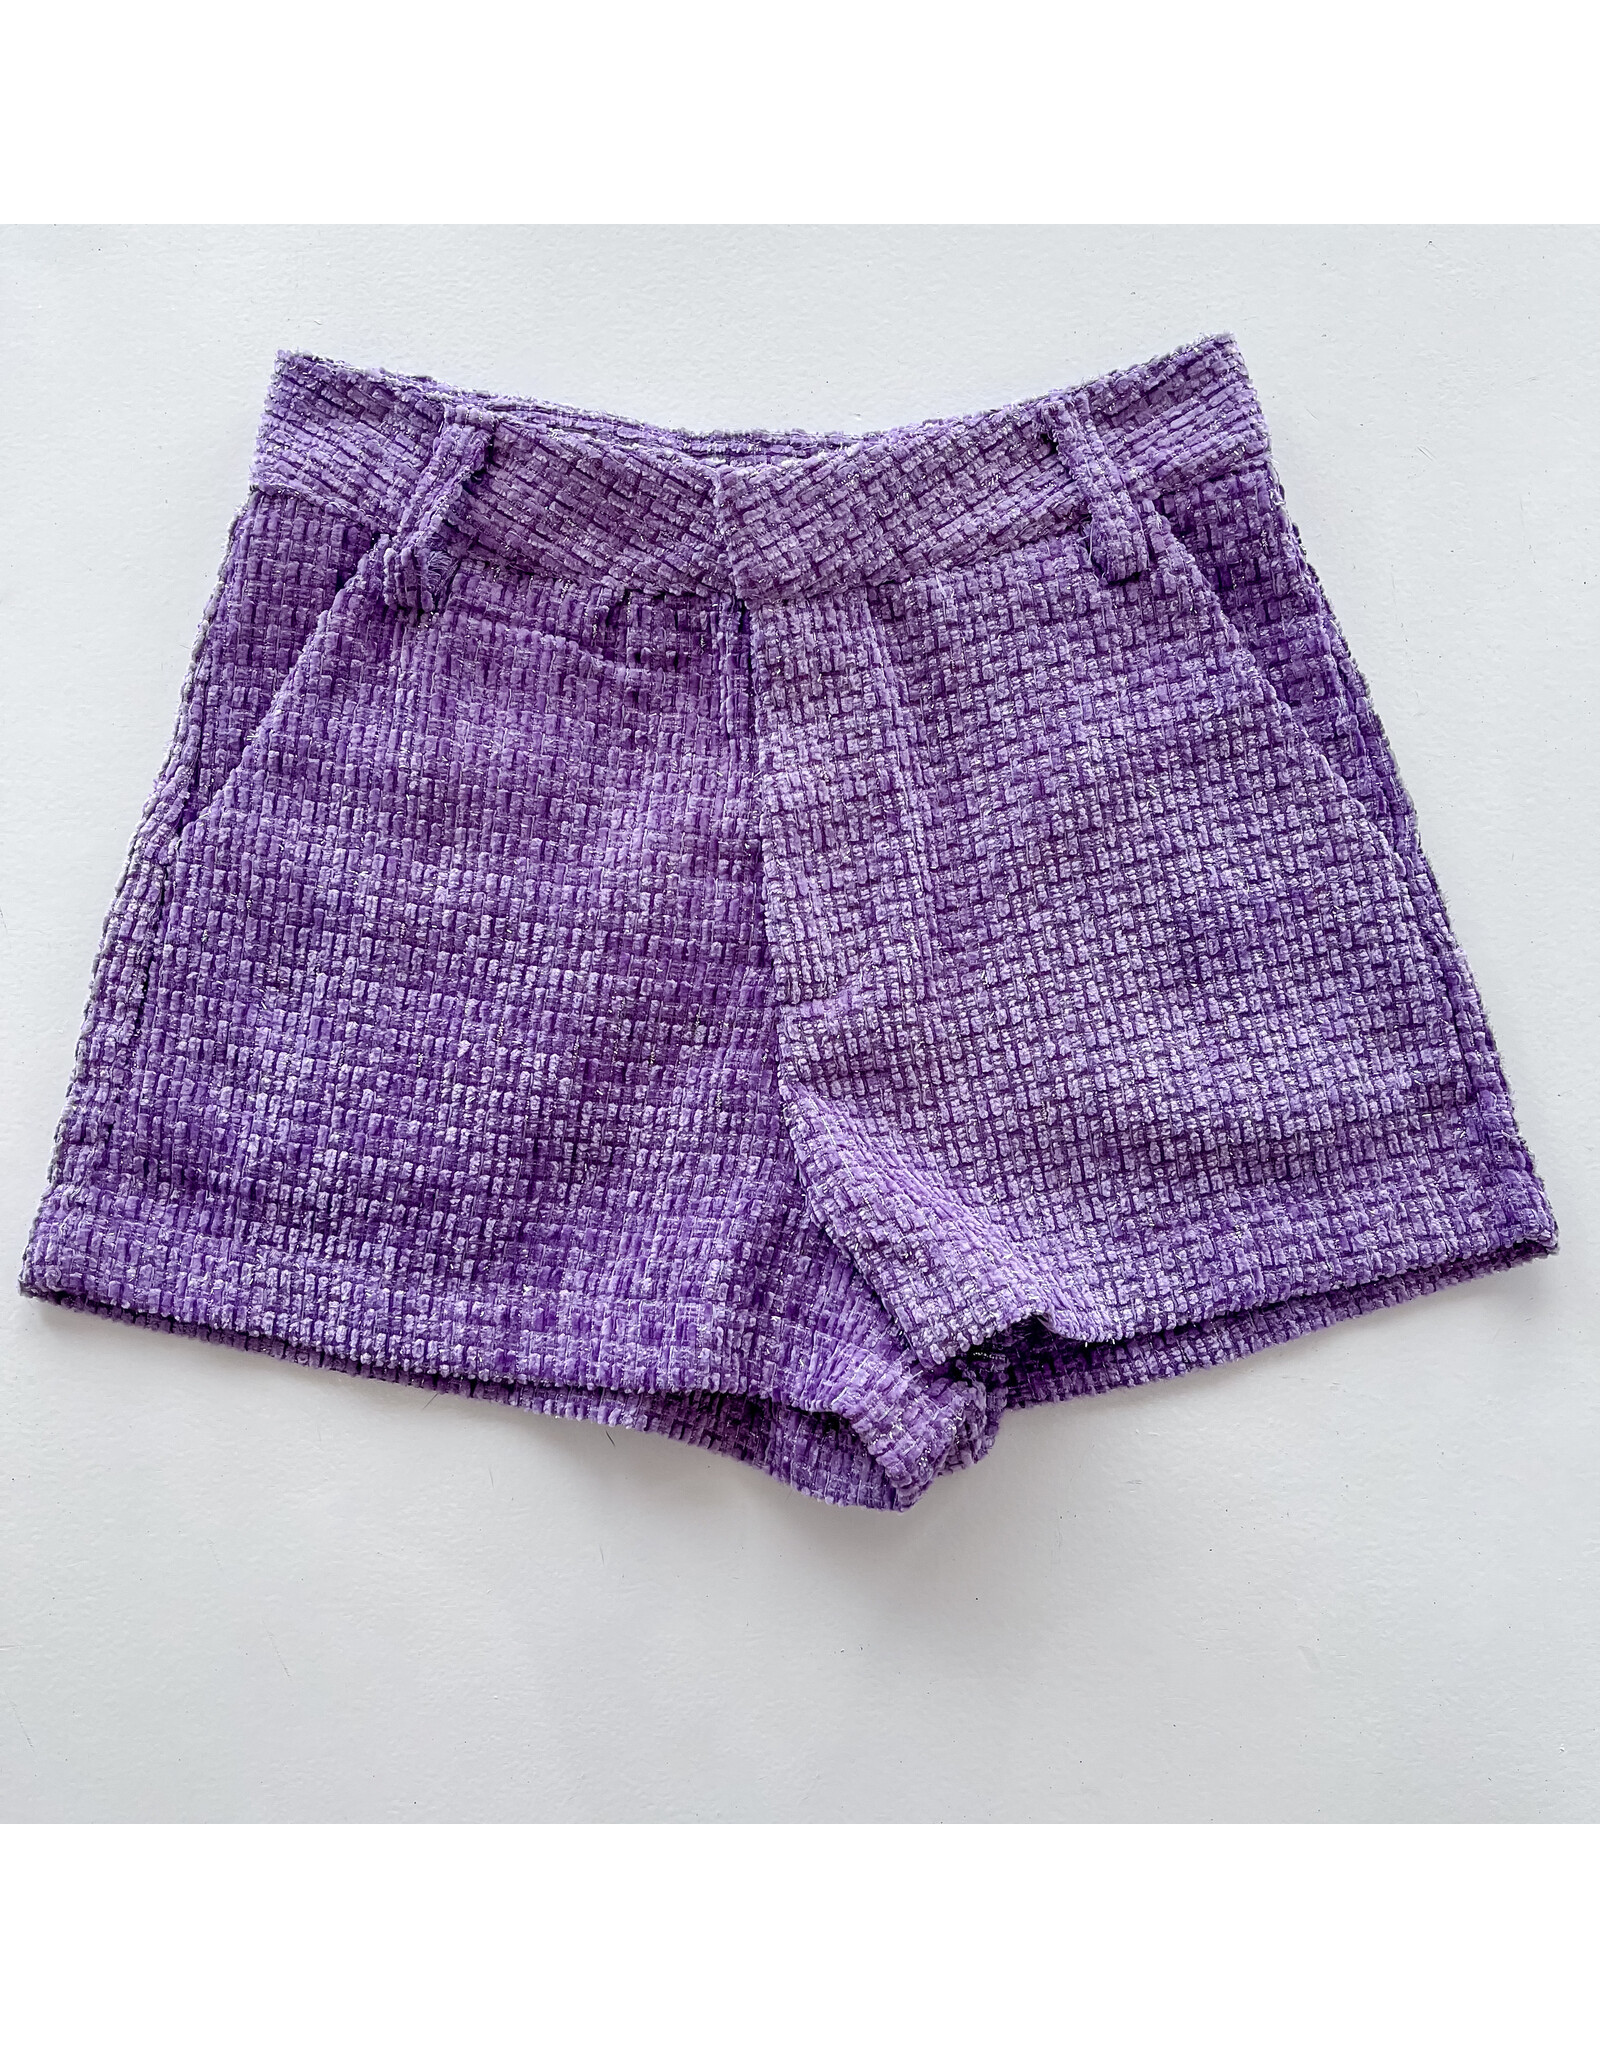 Lavender Textured Shorts